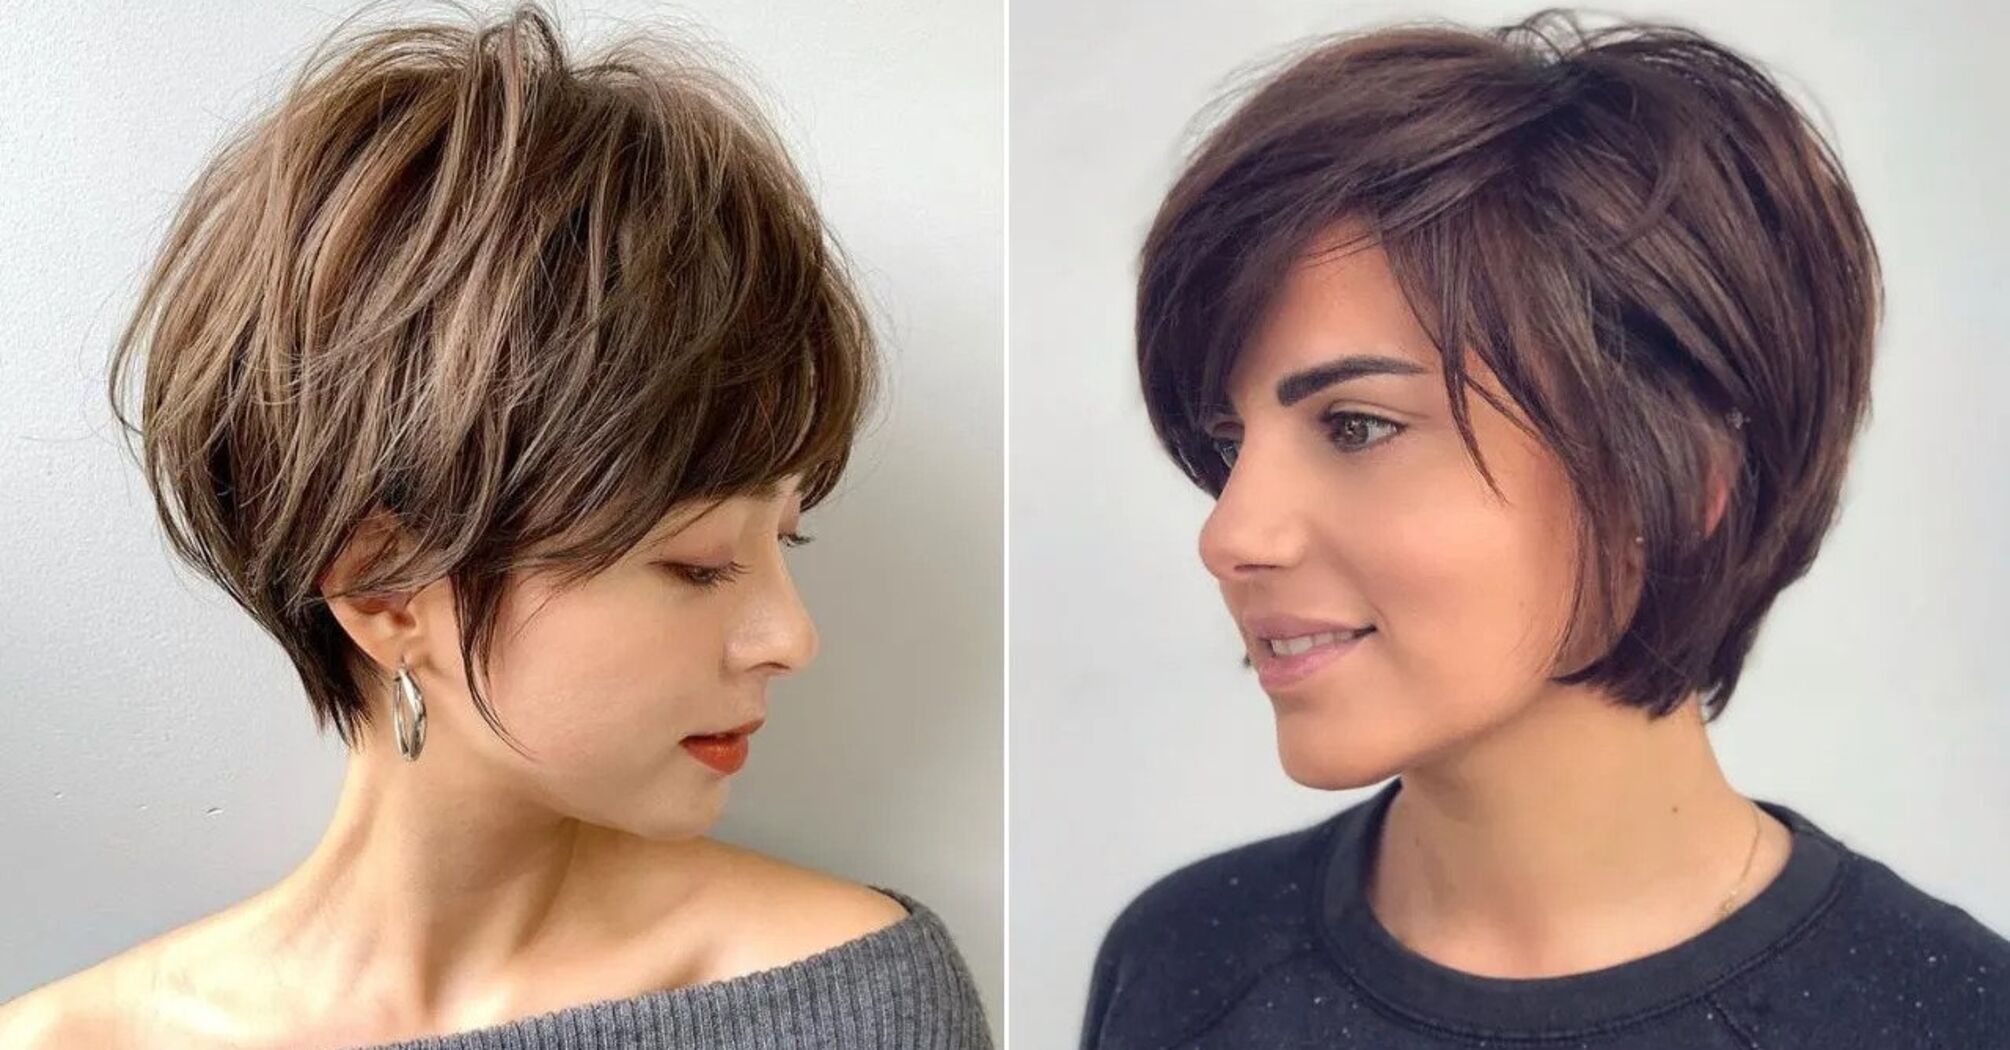 Women's haircuts for short hair